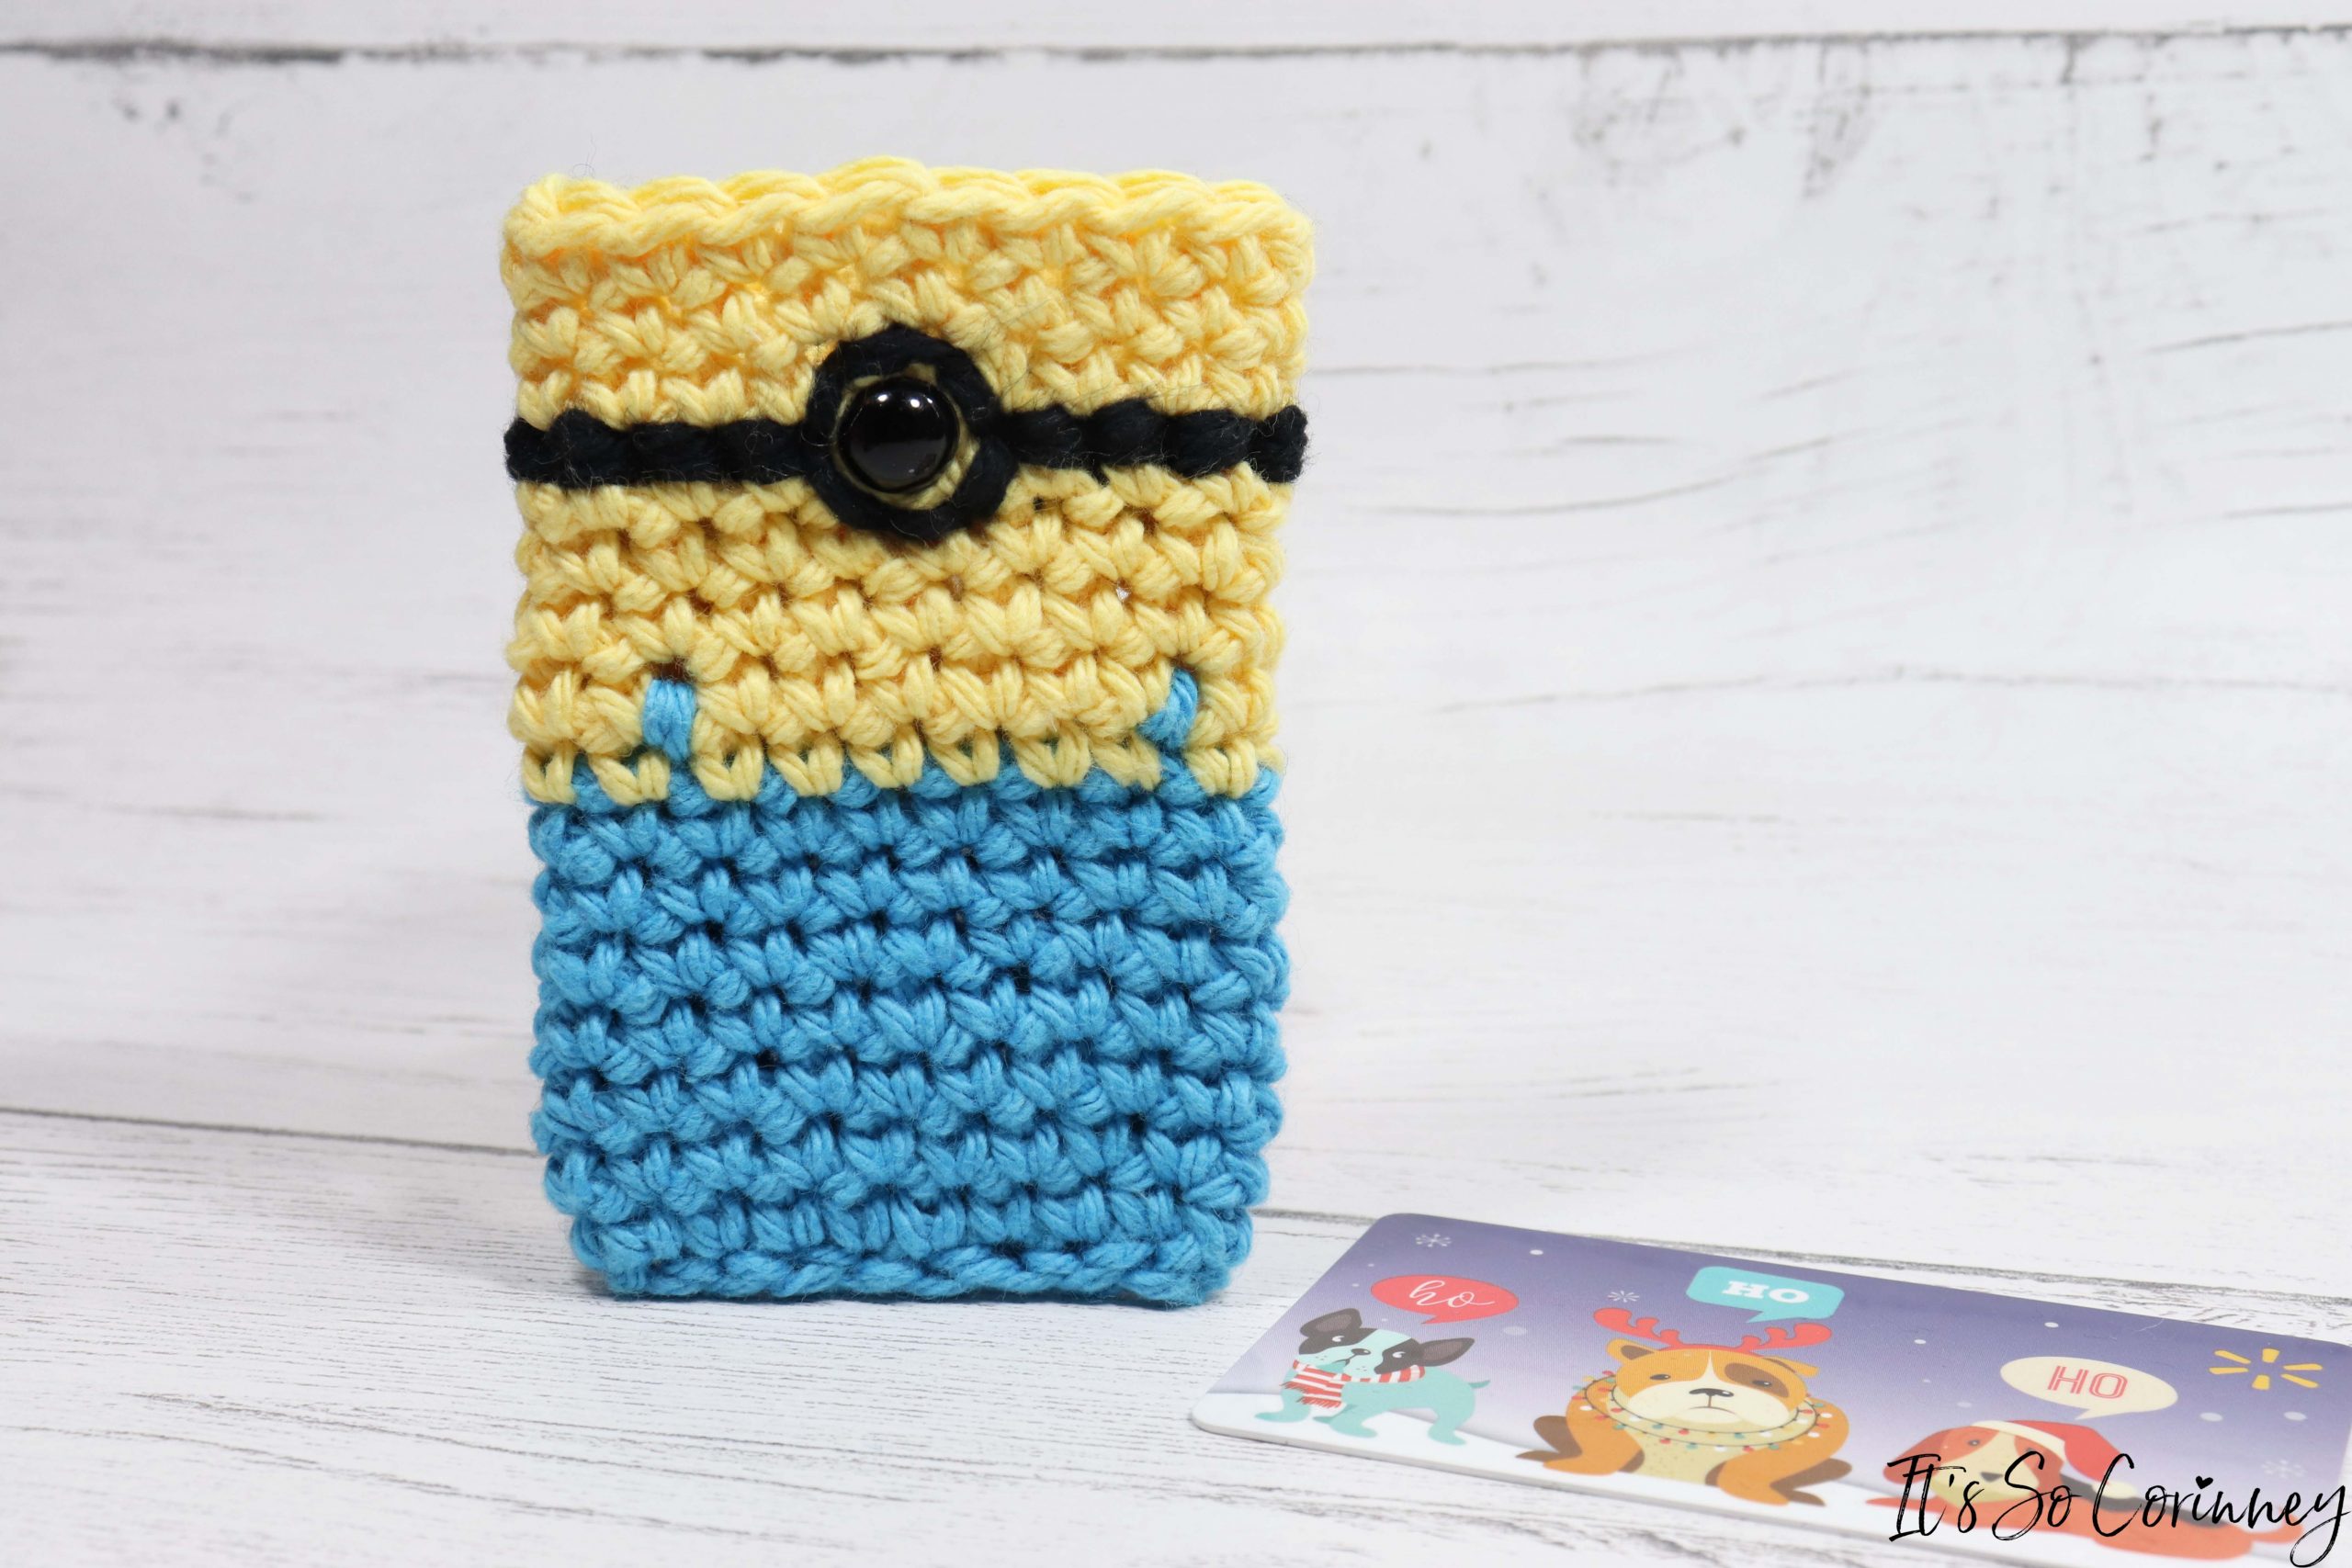 Minion Crochet Gift Card Holder